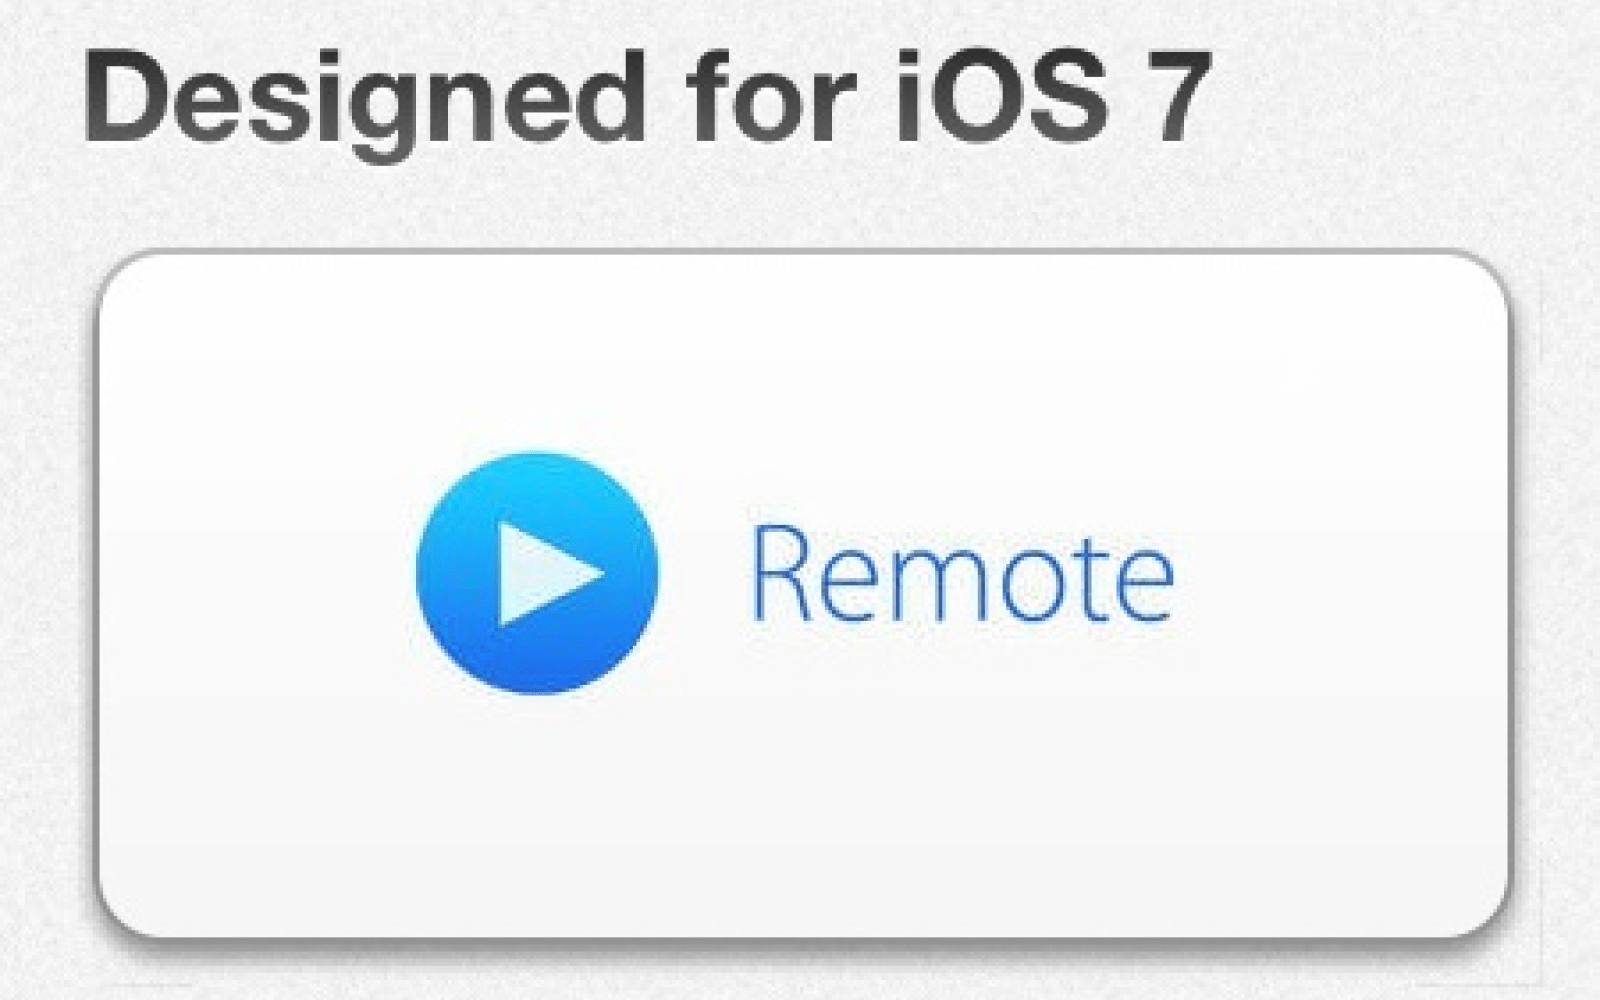 RemoteApp Logo - App Store banner corroborates impending iOS 7 update for Apple's